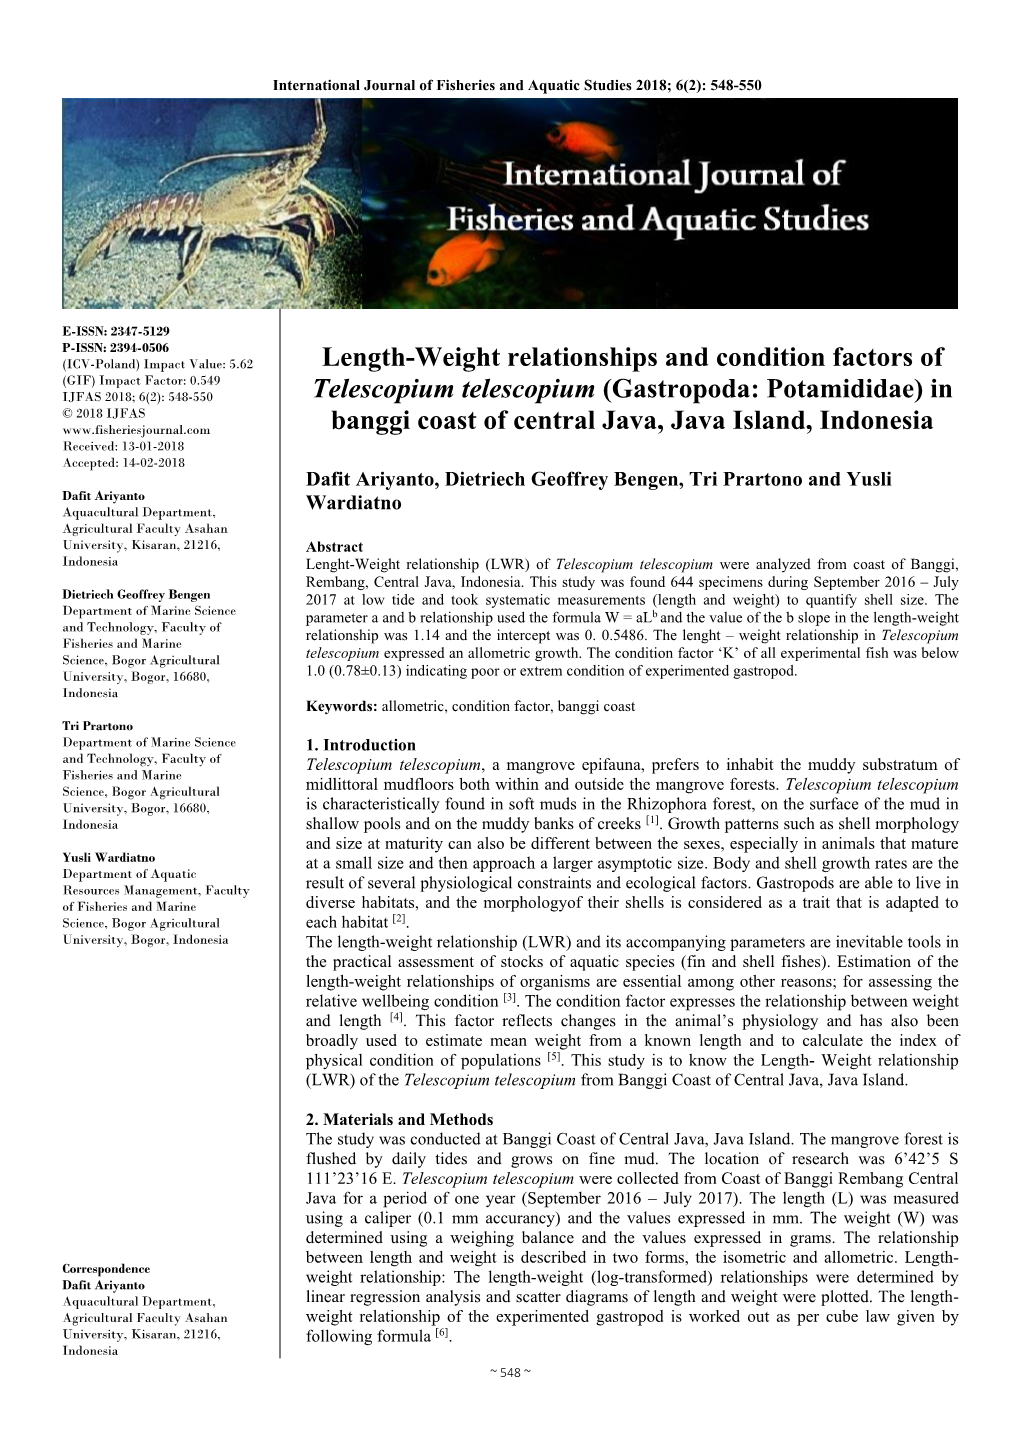 Length-Weight Relationships and Condition Factors of Telescopium Telescopium (Gastropoda: Potamididae) in Banggi Coast of Centra